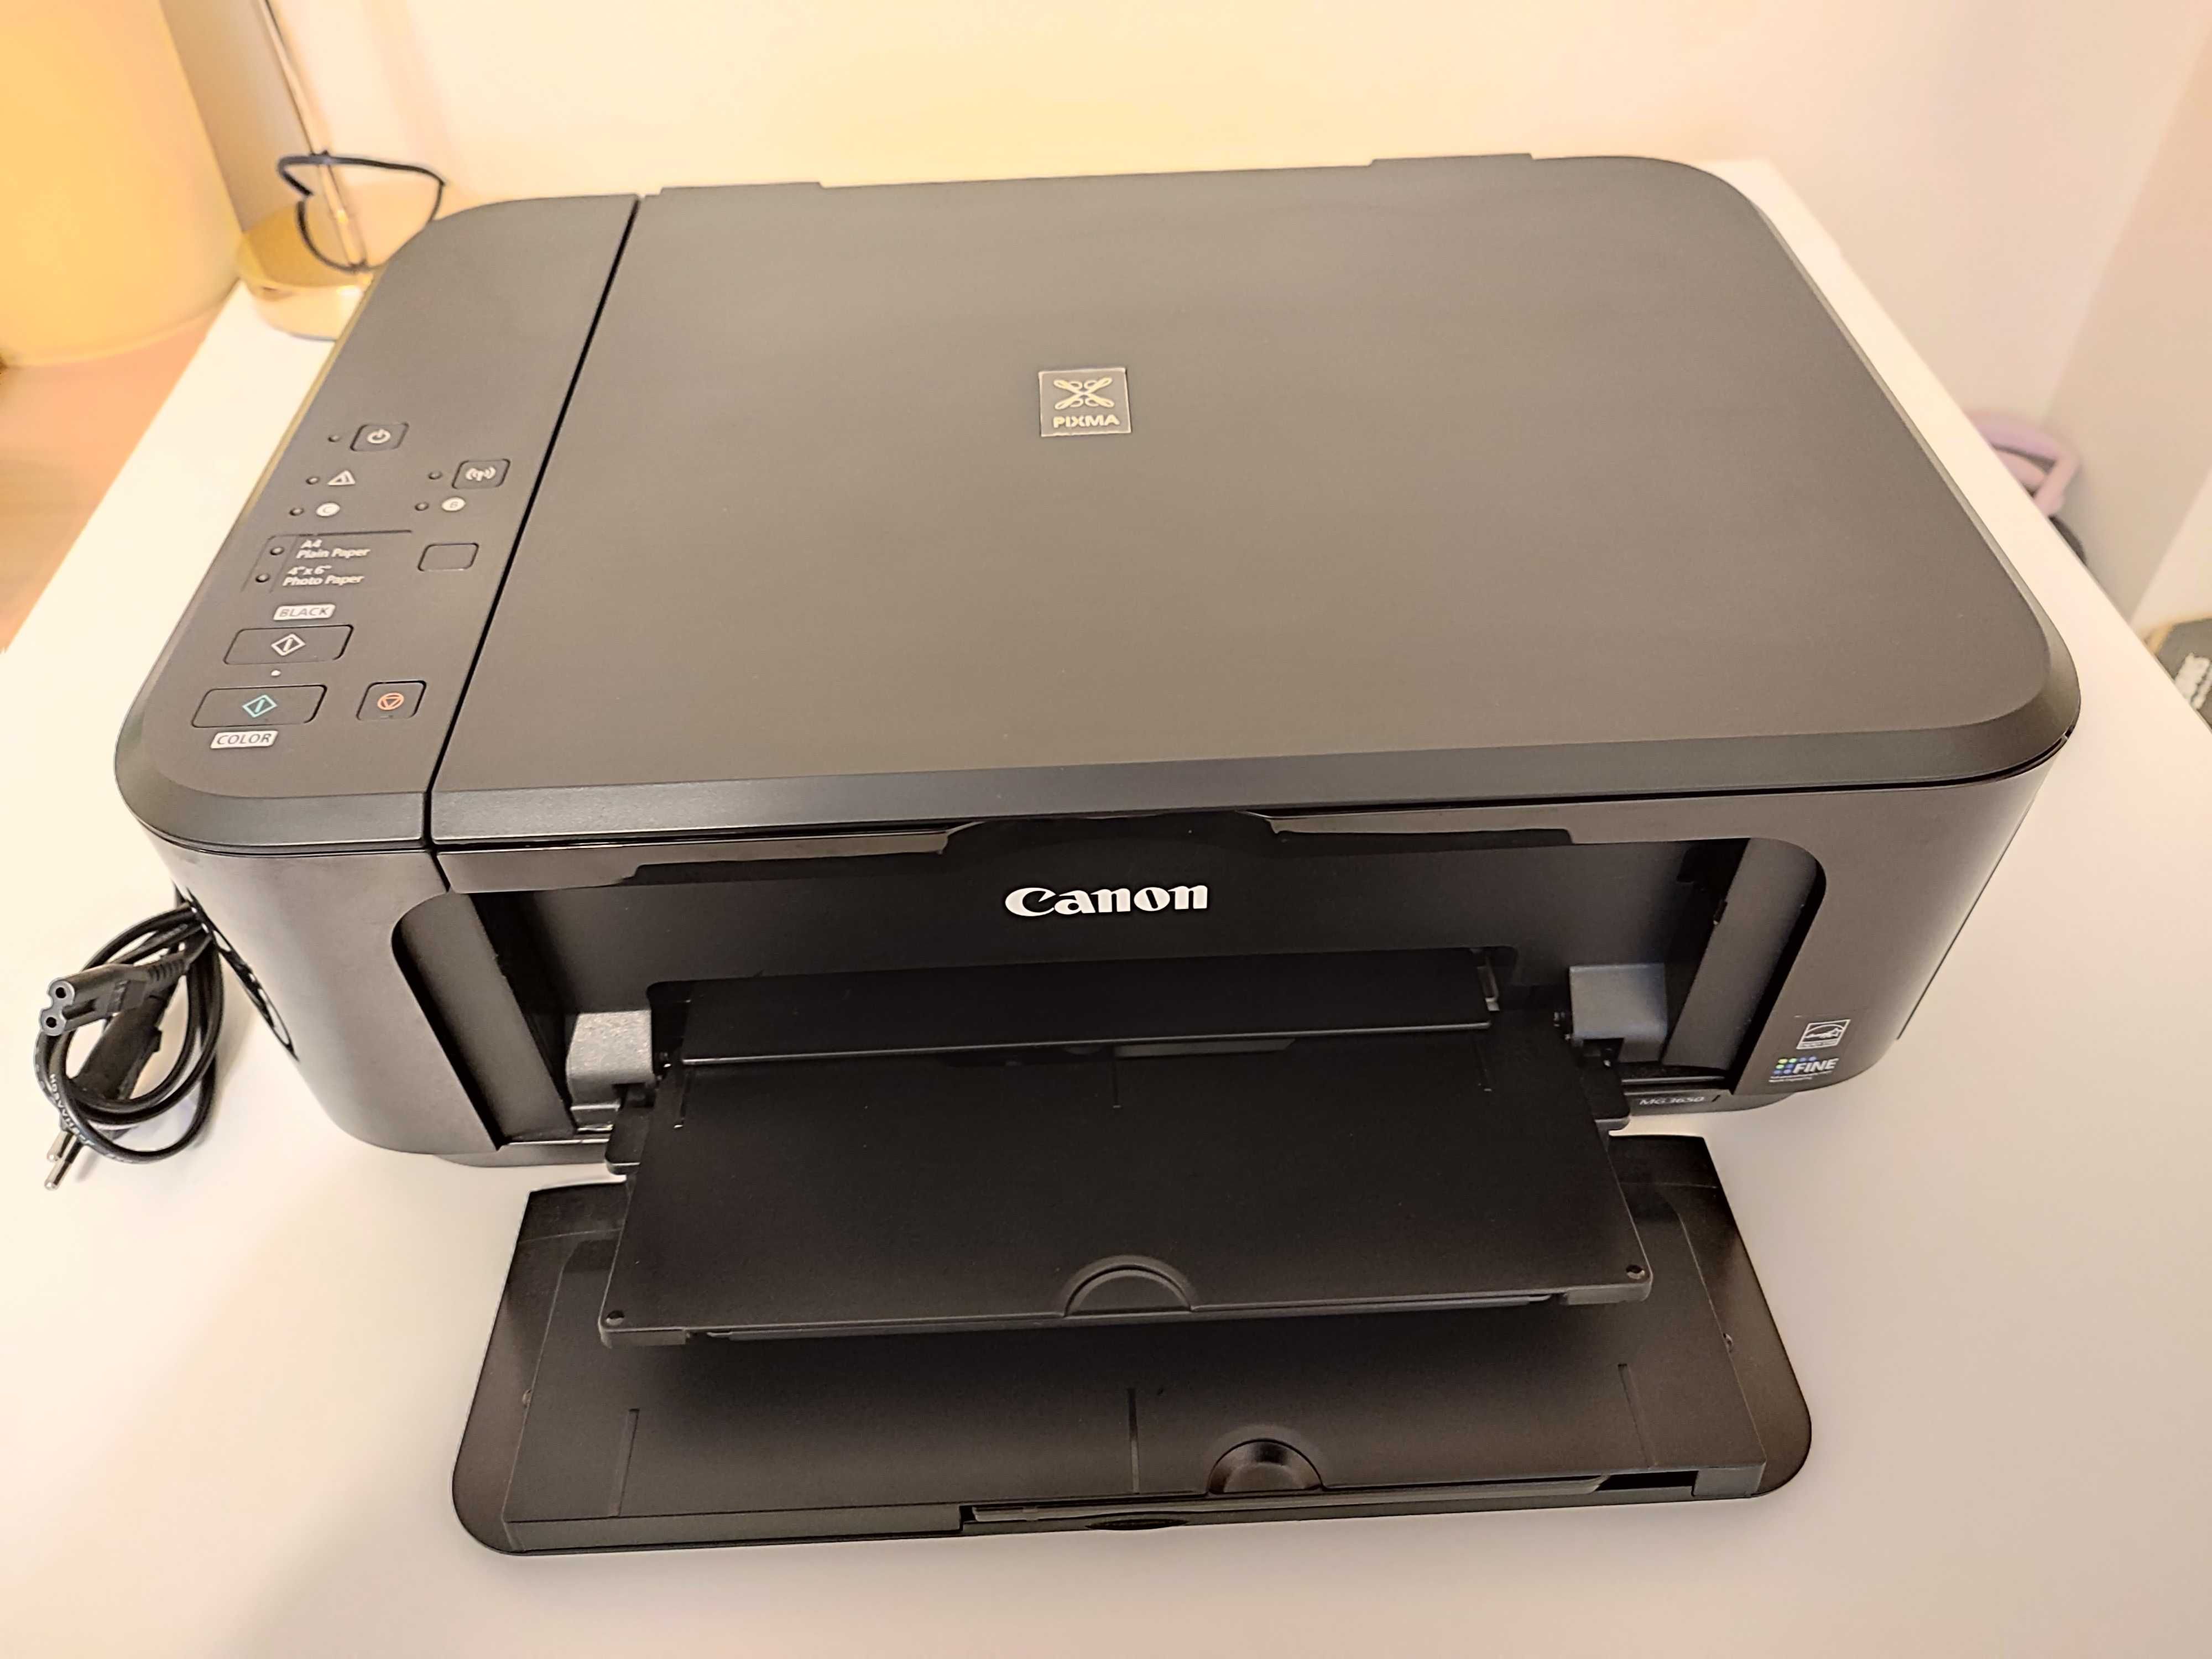 Imprimanta multinfunctionala Canon Pixma MG3650 cu conectare Wifi